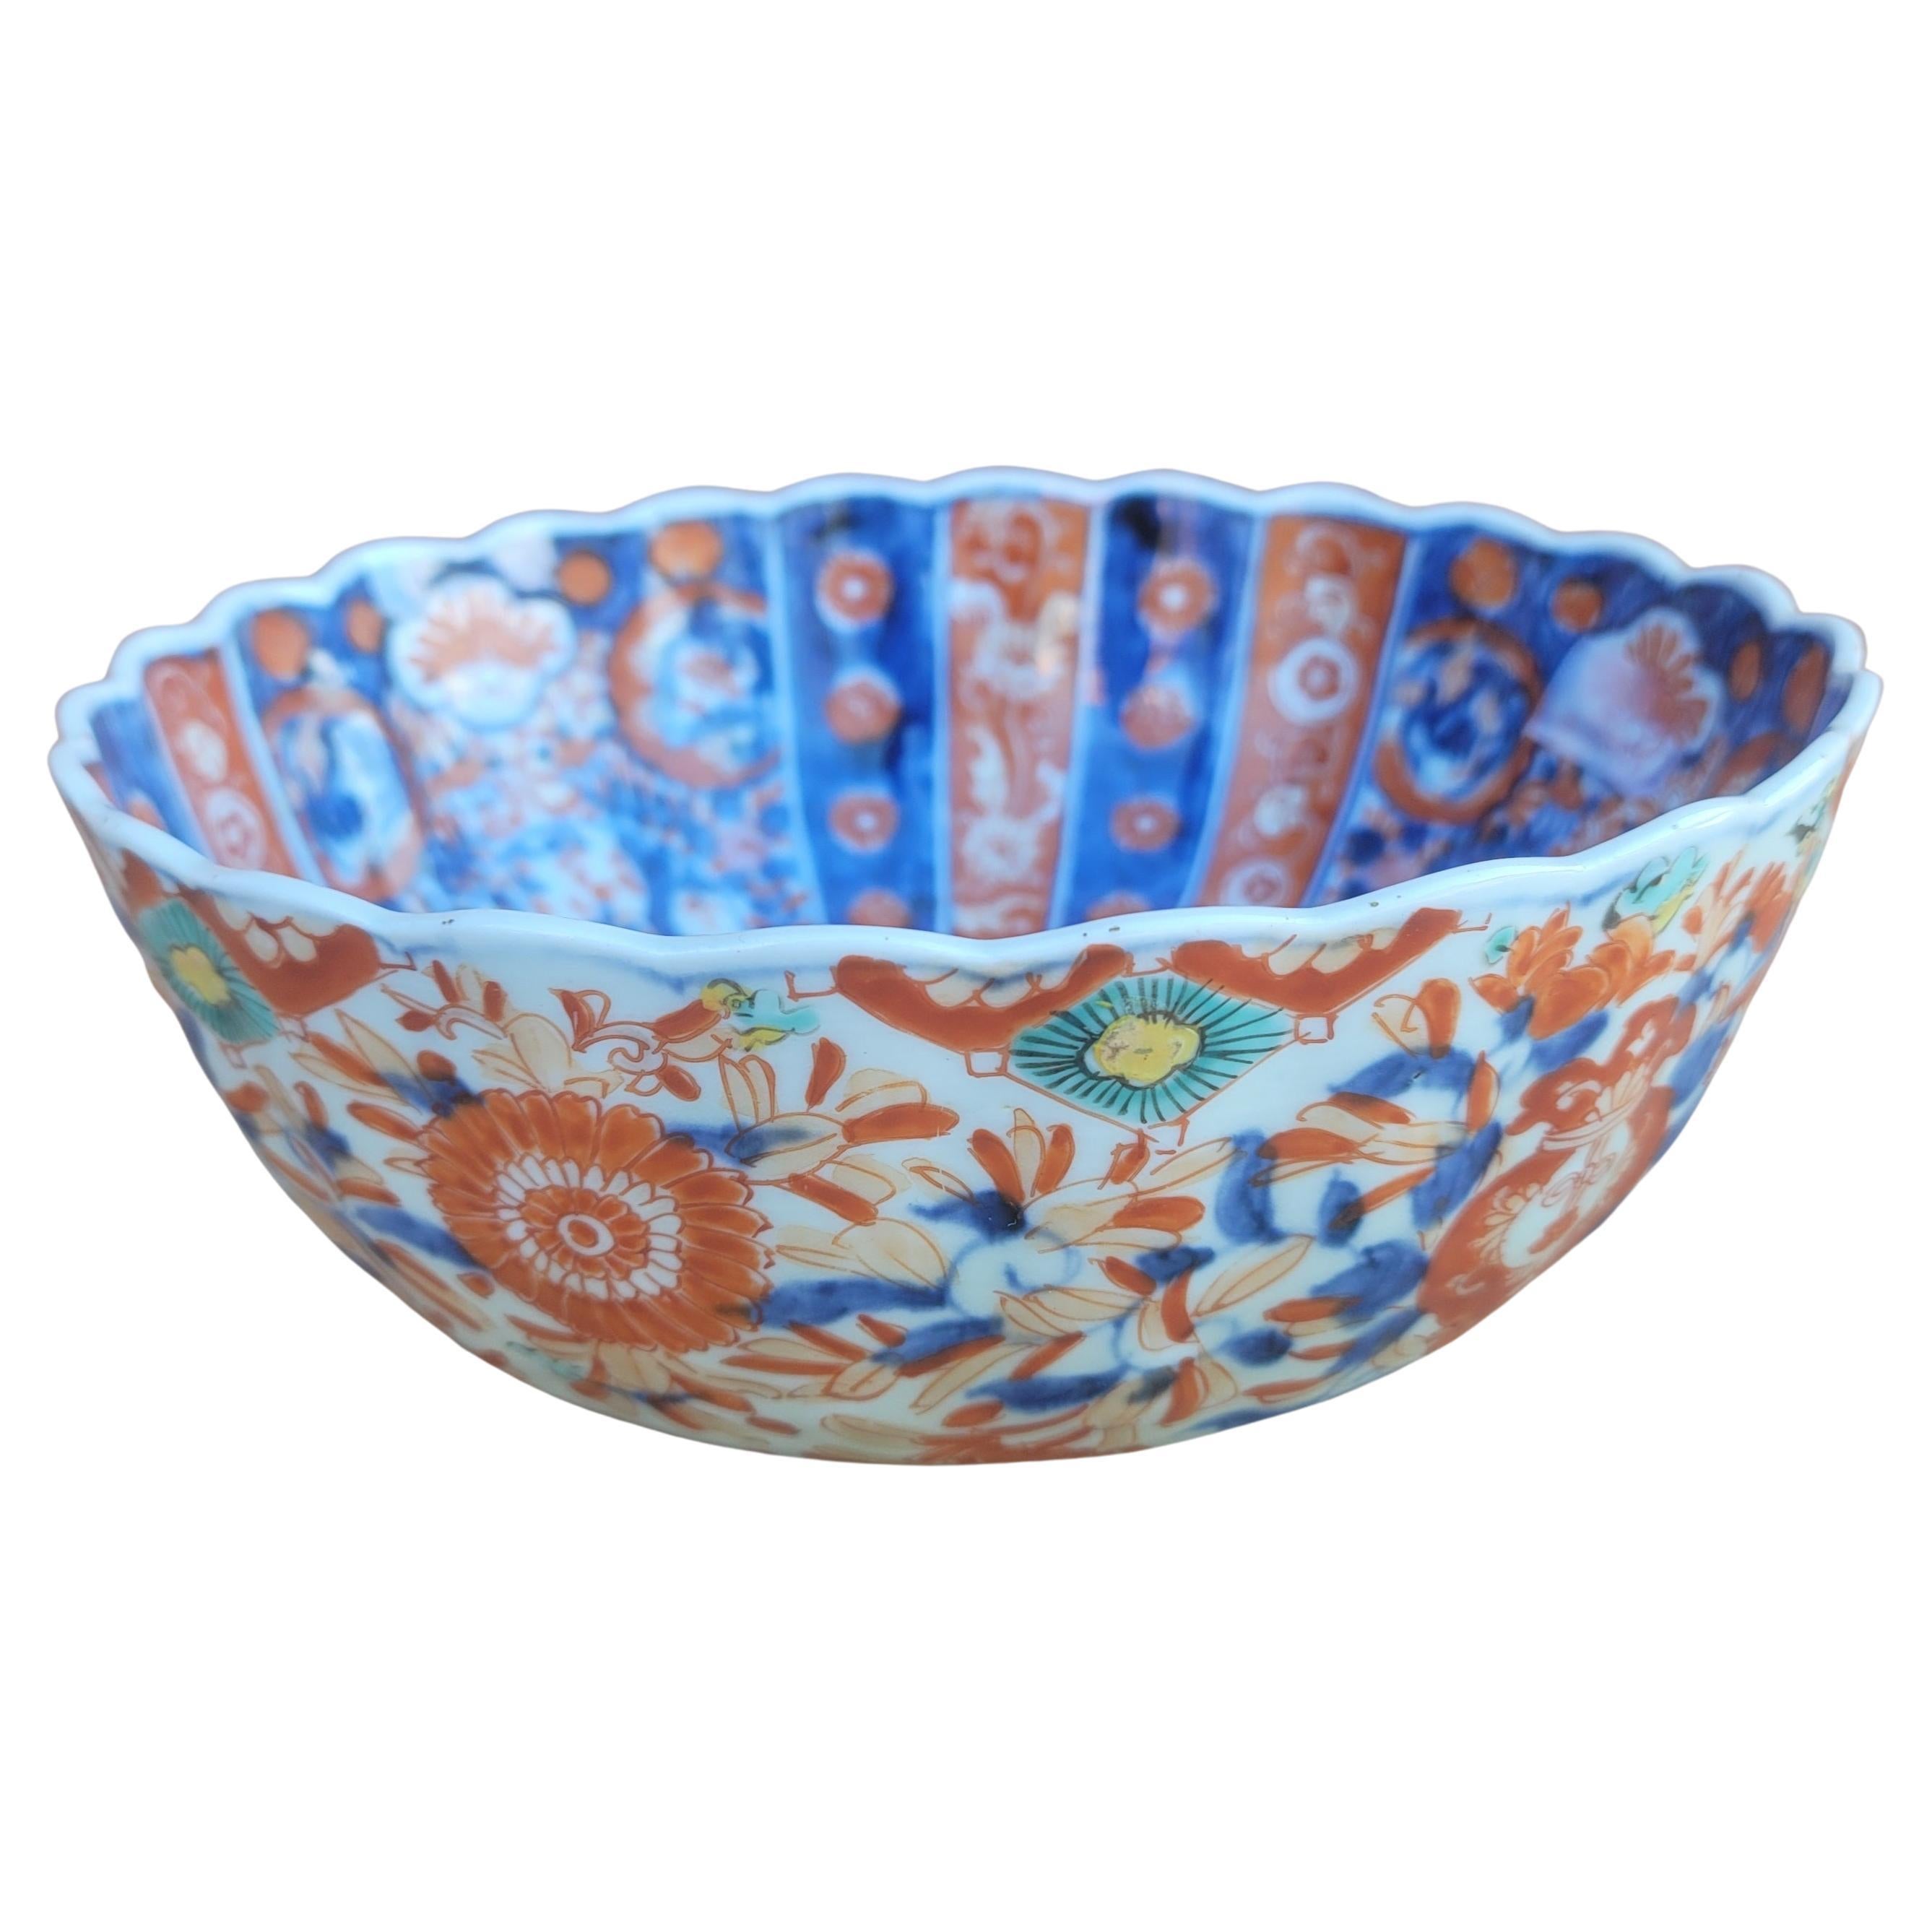 19th century Japanese Imari Decorative centerpiece bowl. Measures 10